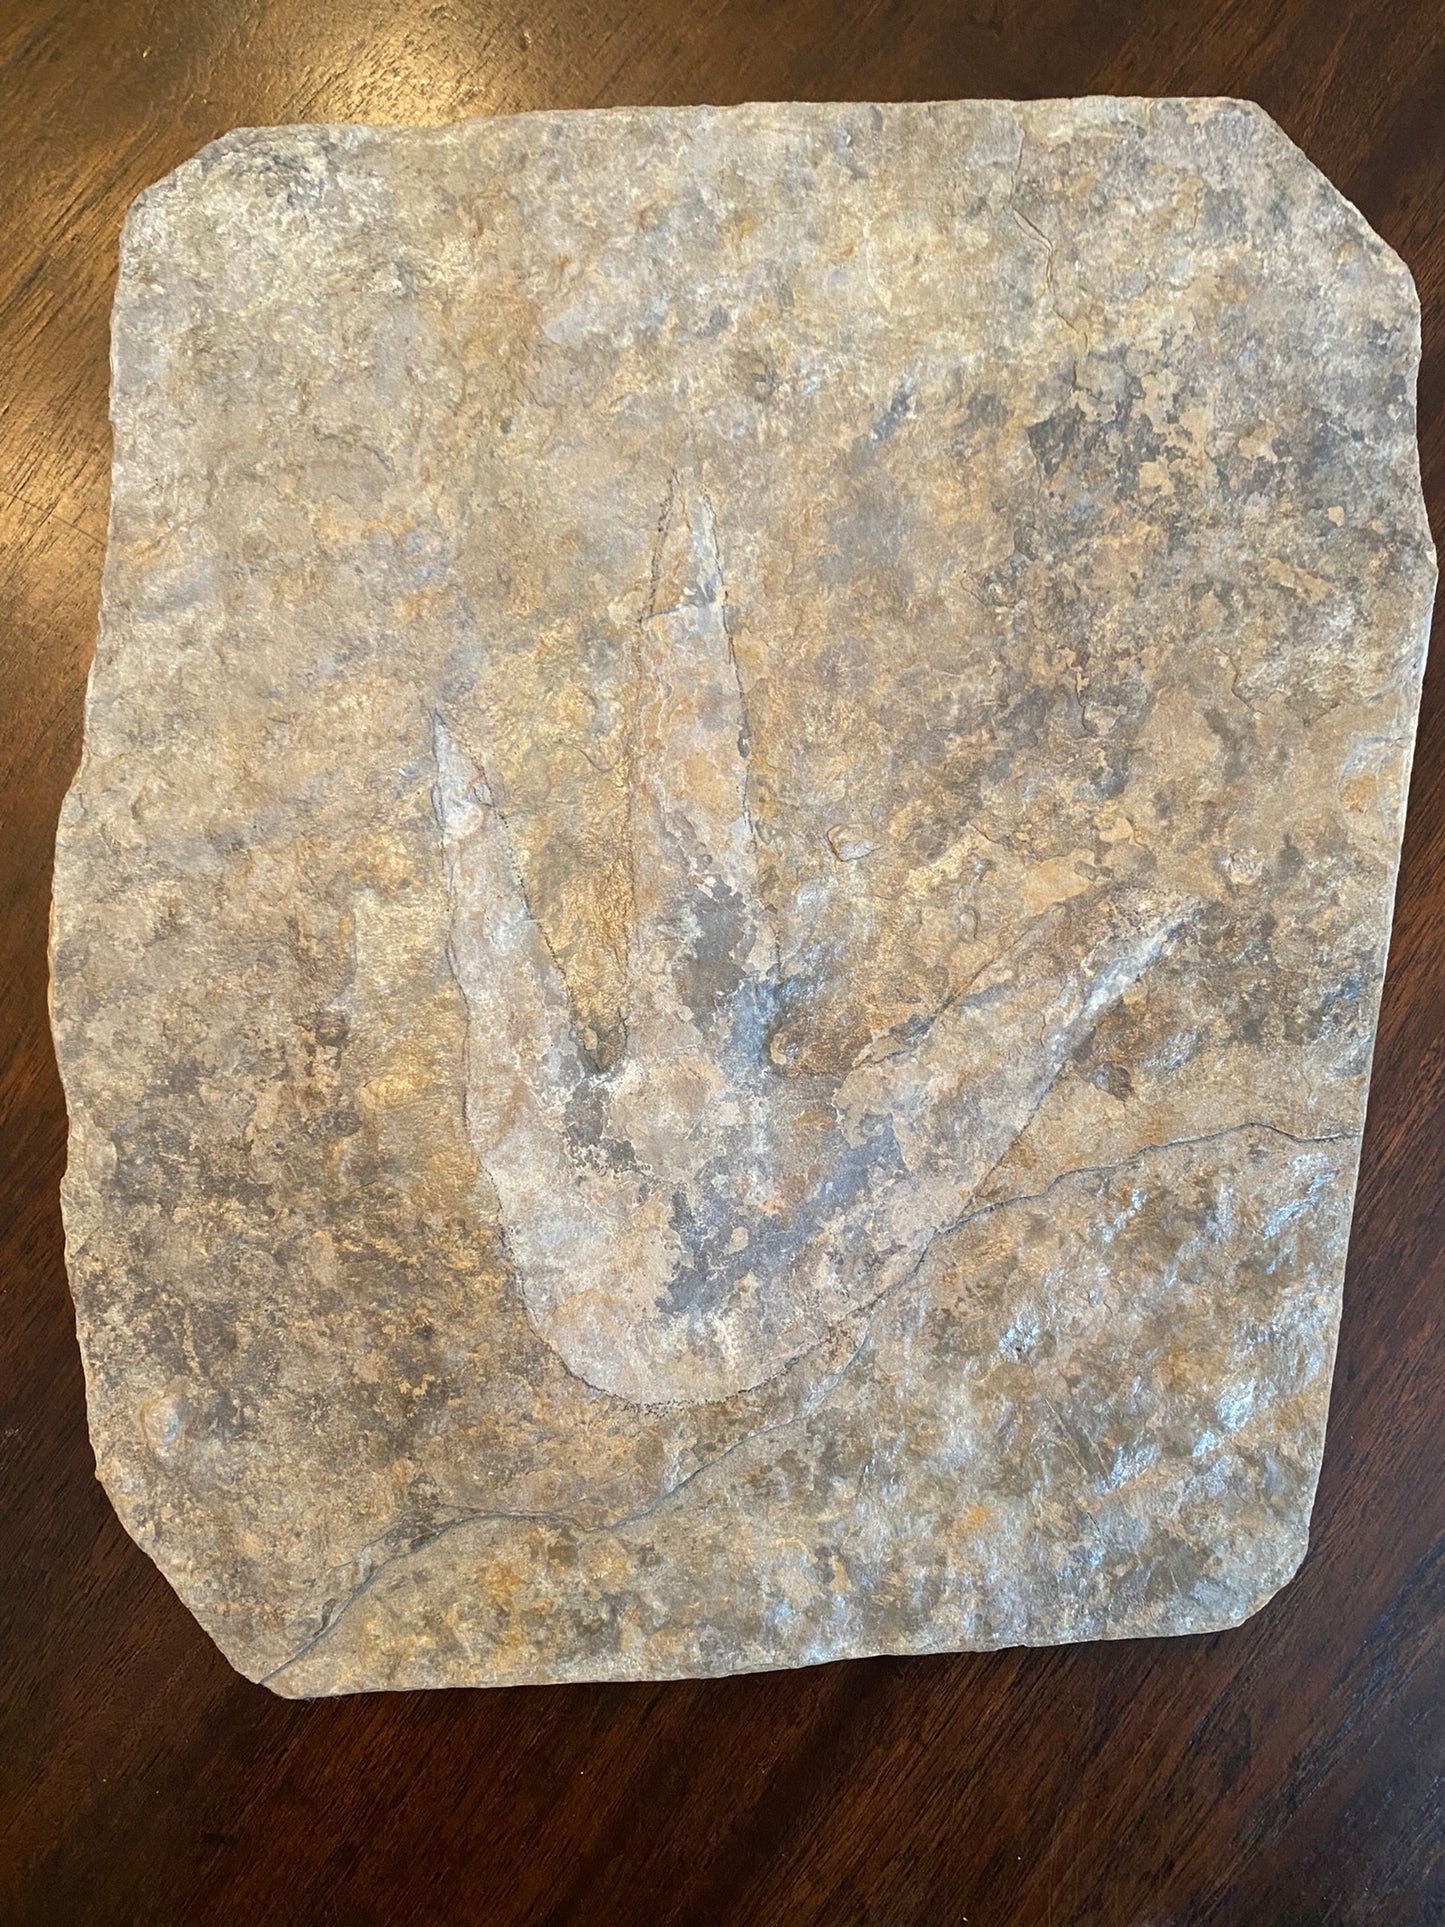 Dinosaur footprint pair (theropod), Jurassic, France